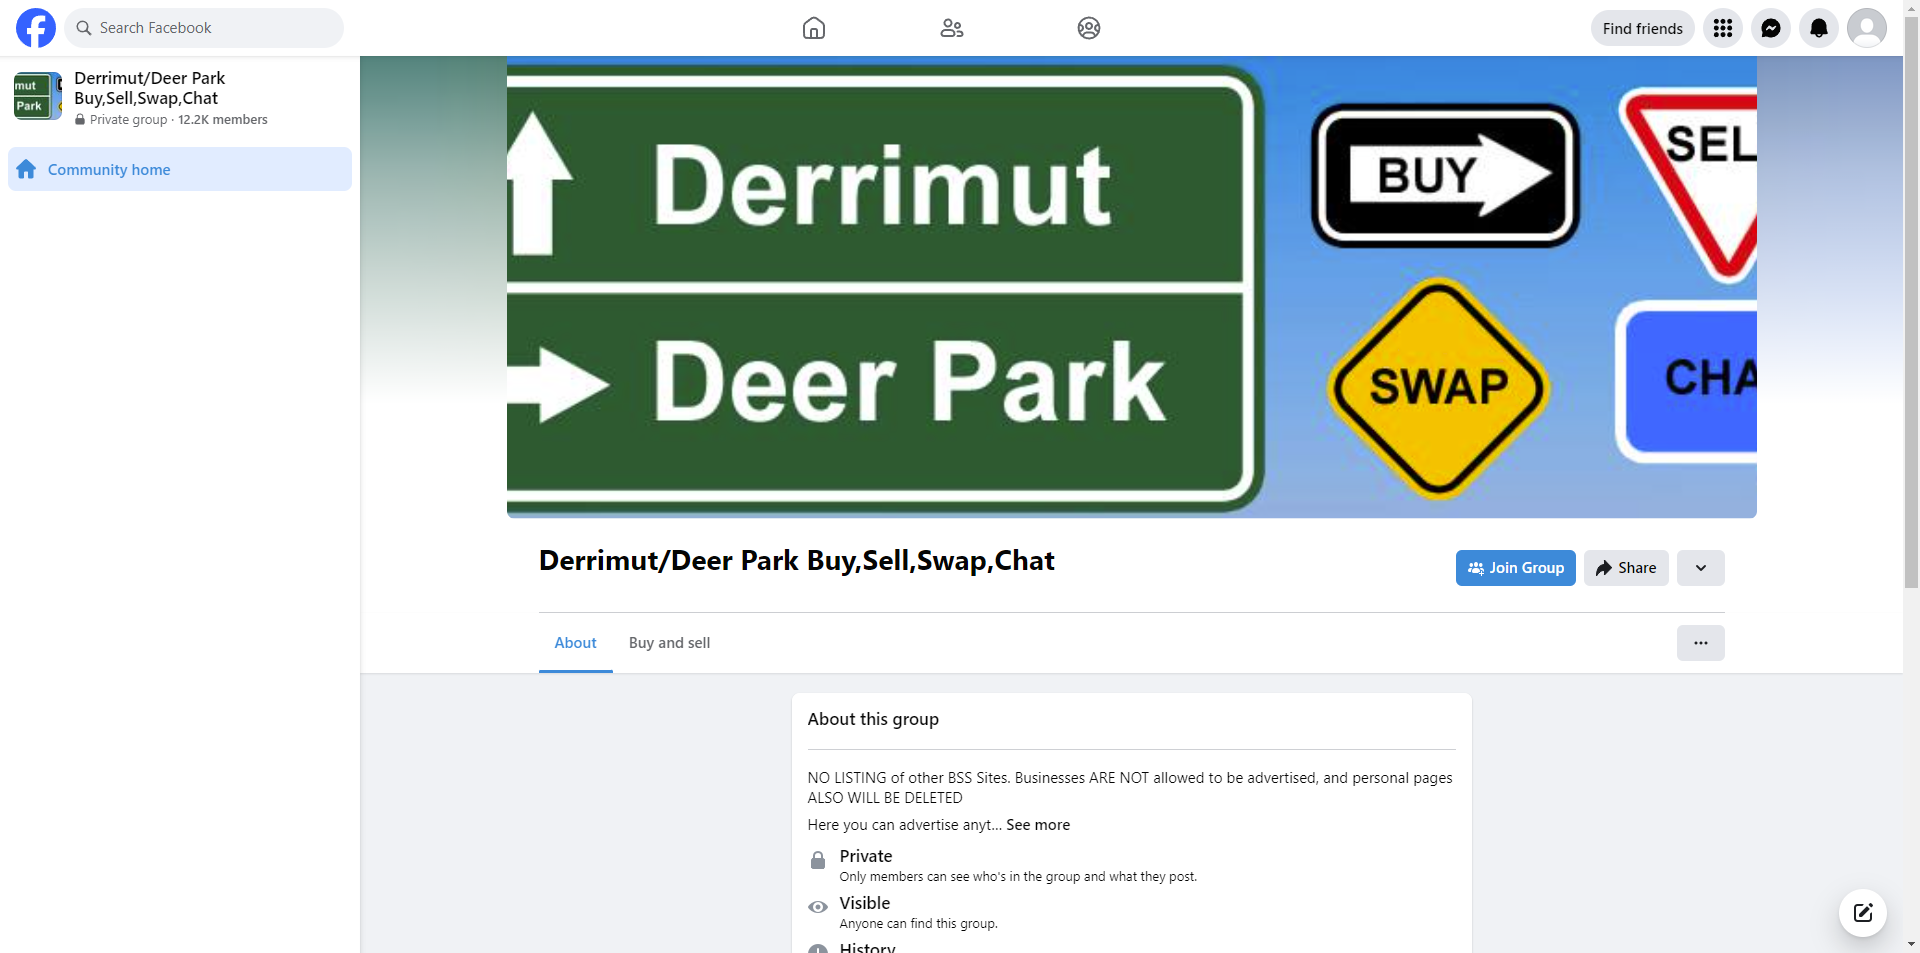 Derrimut/Deer Park Buy, Sell, Swap